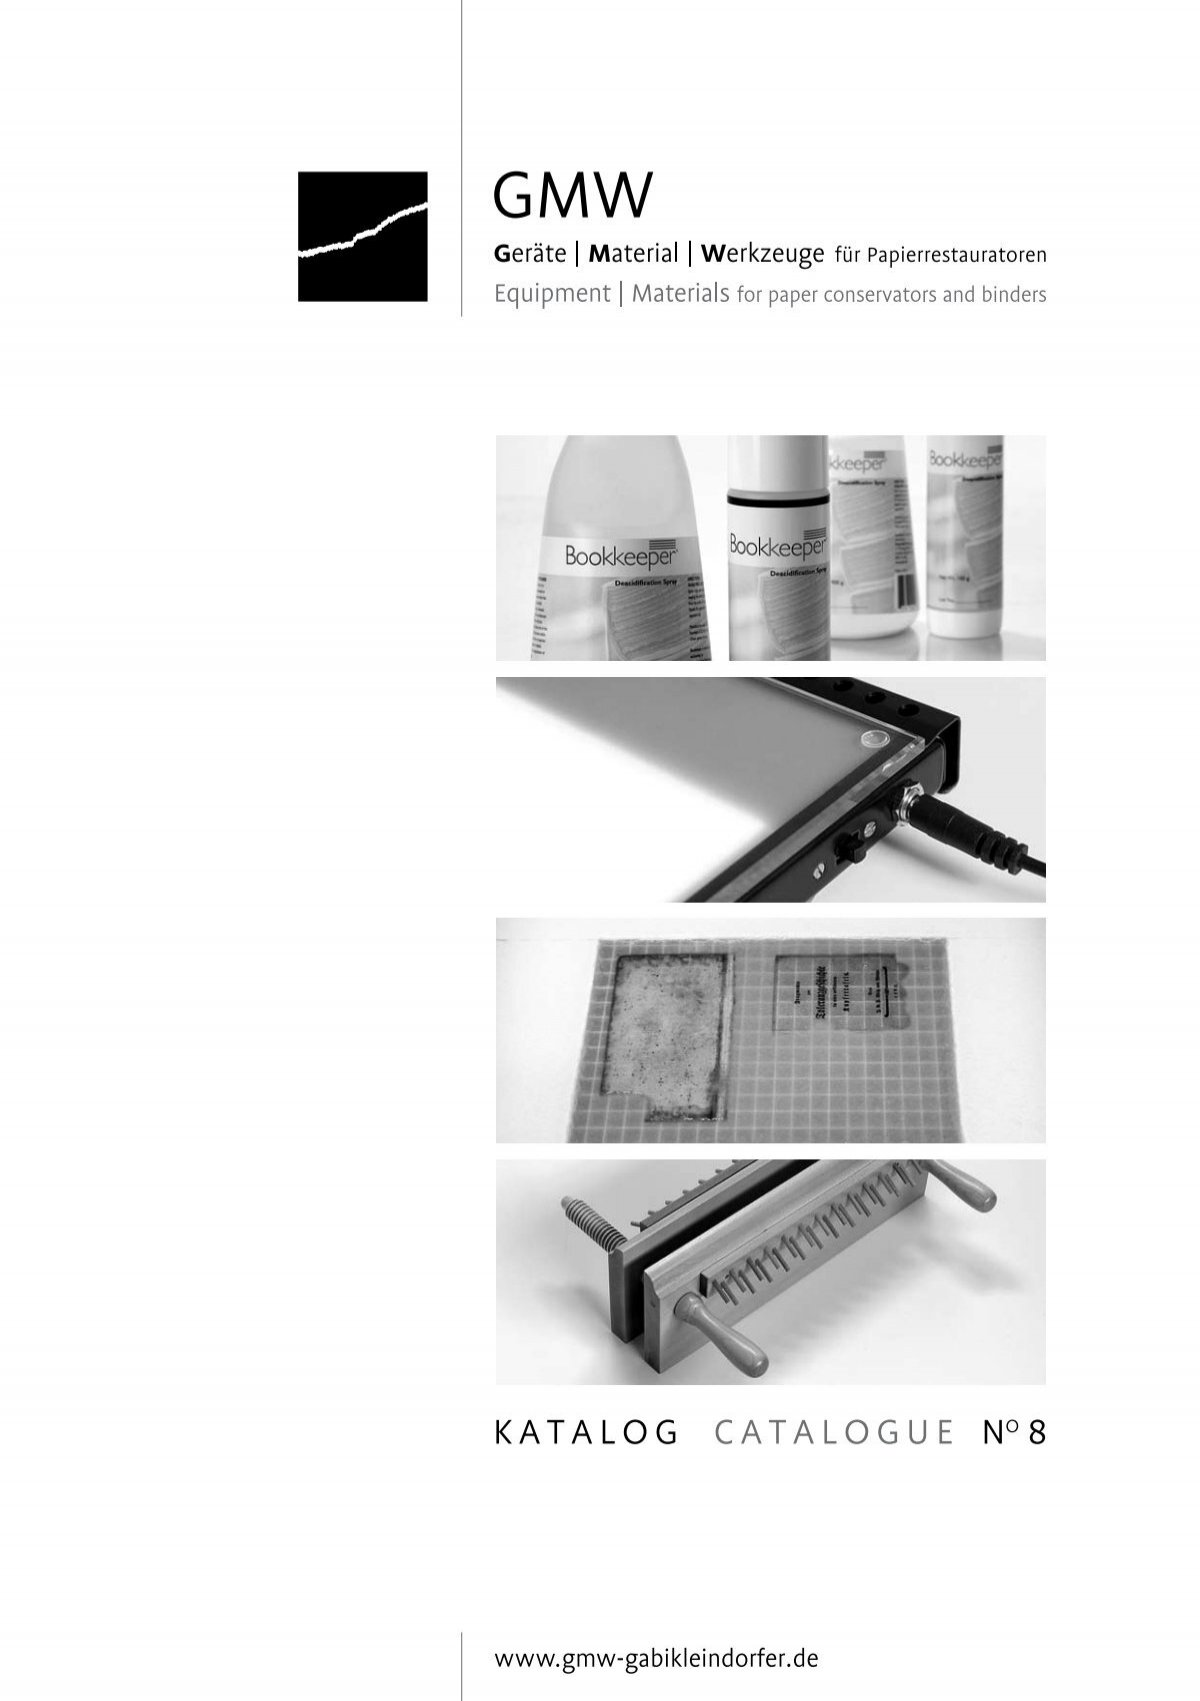 Katalog Catalogue No 8